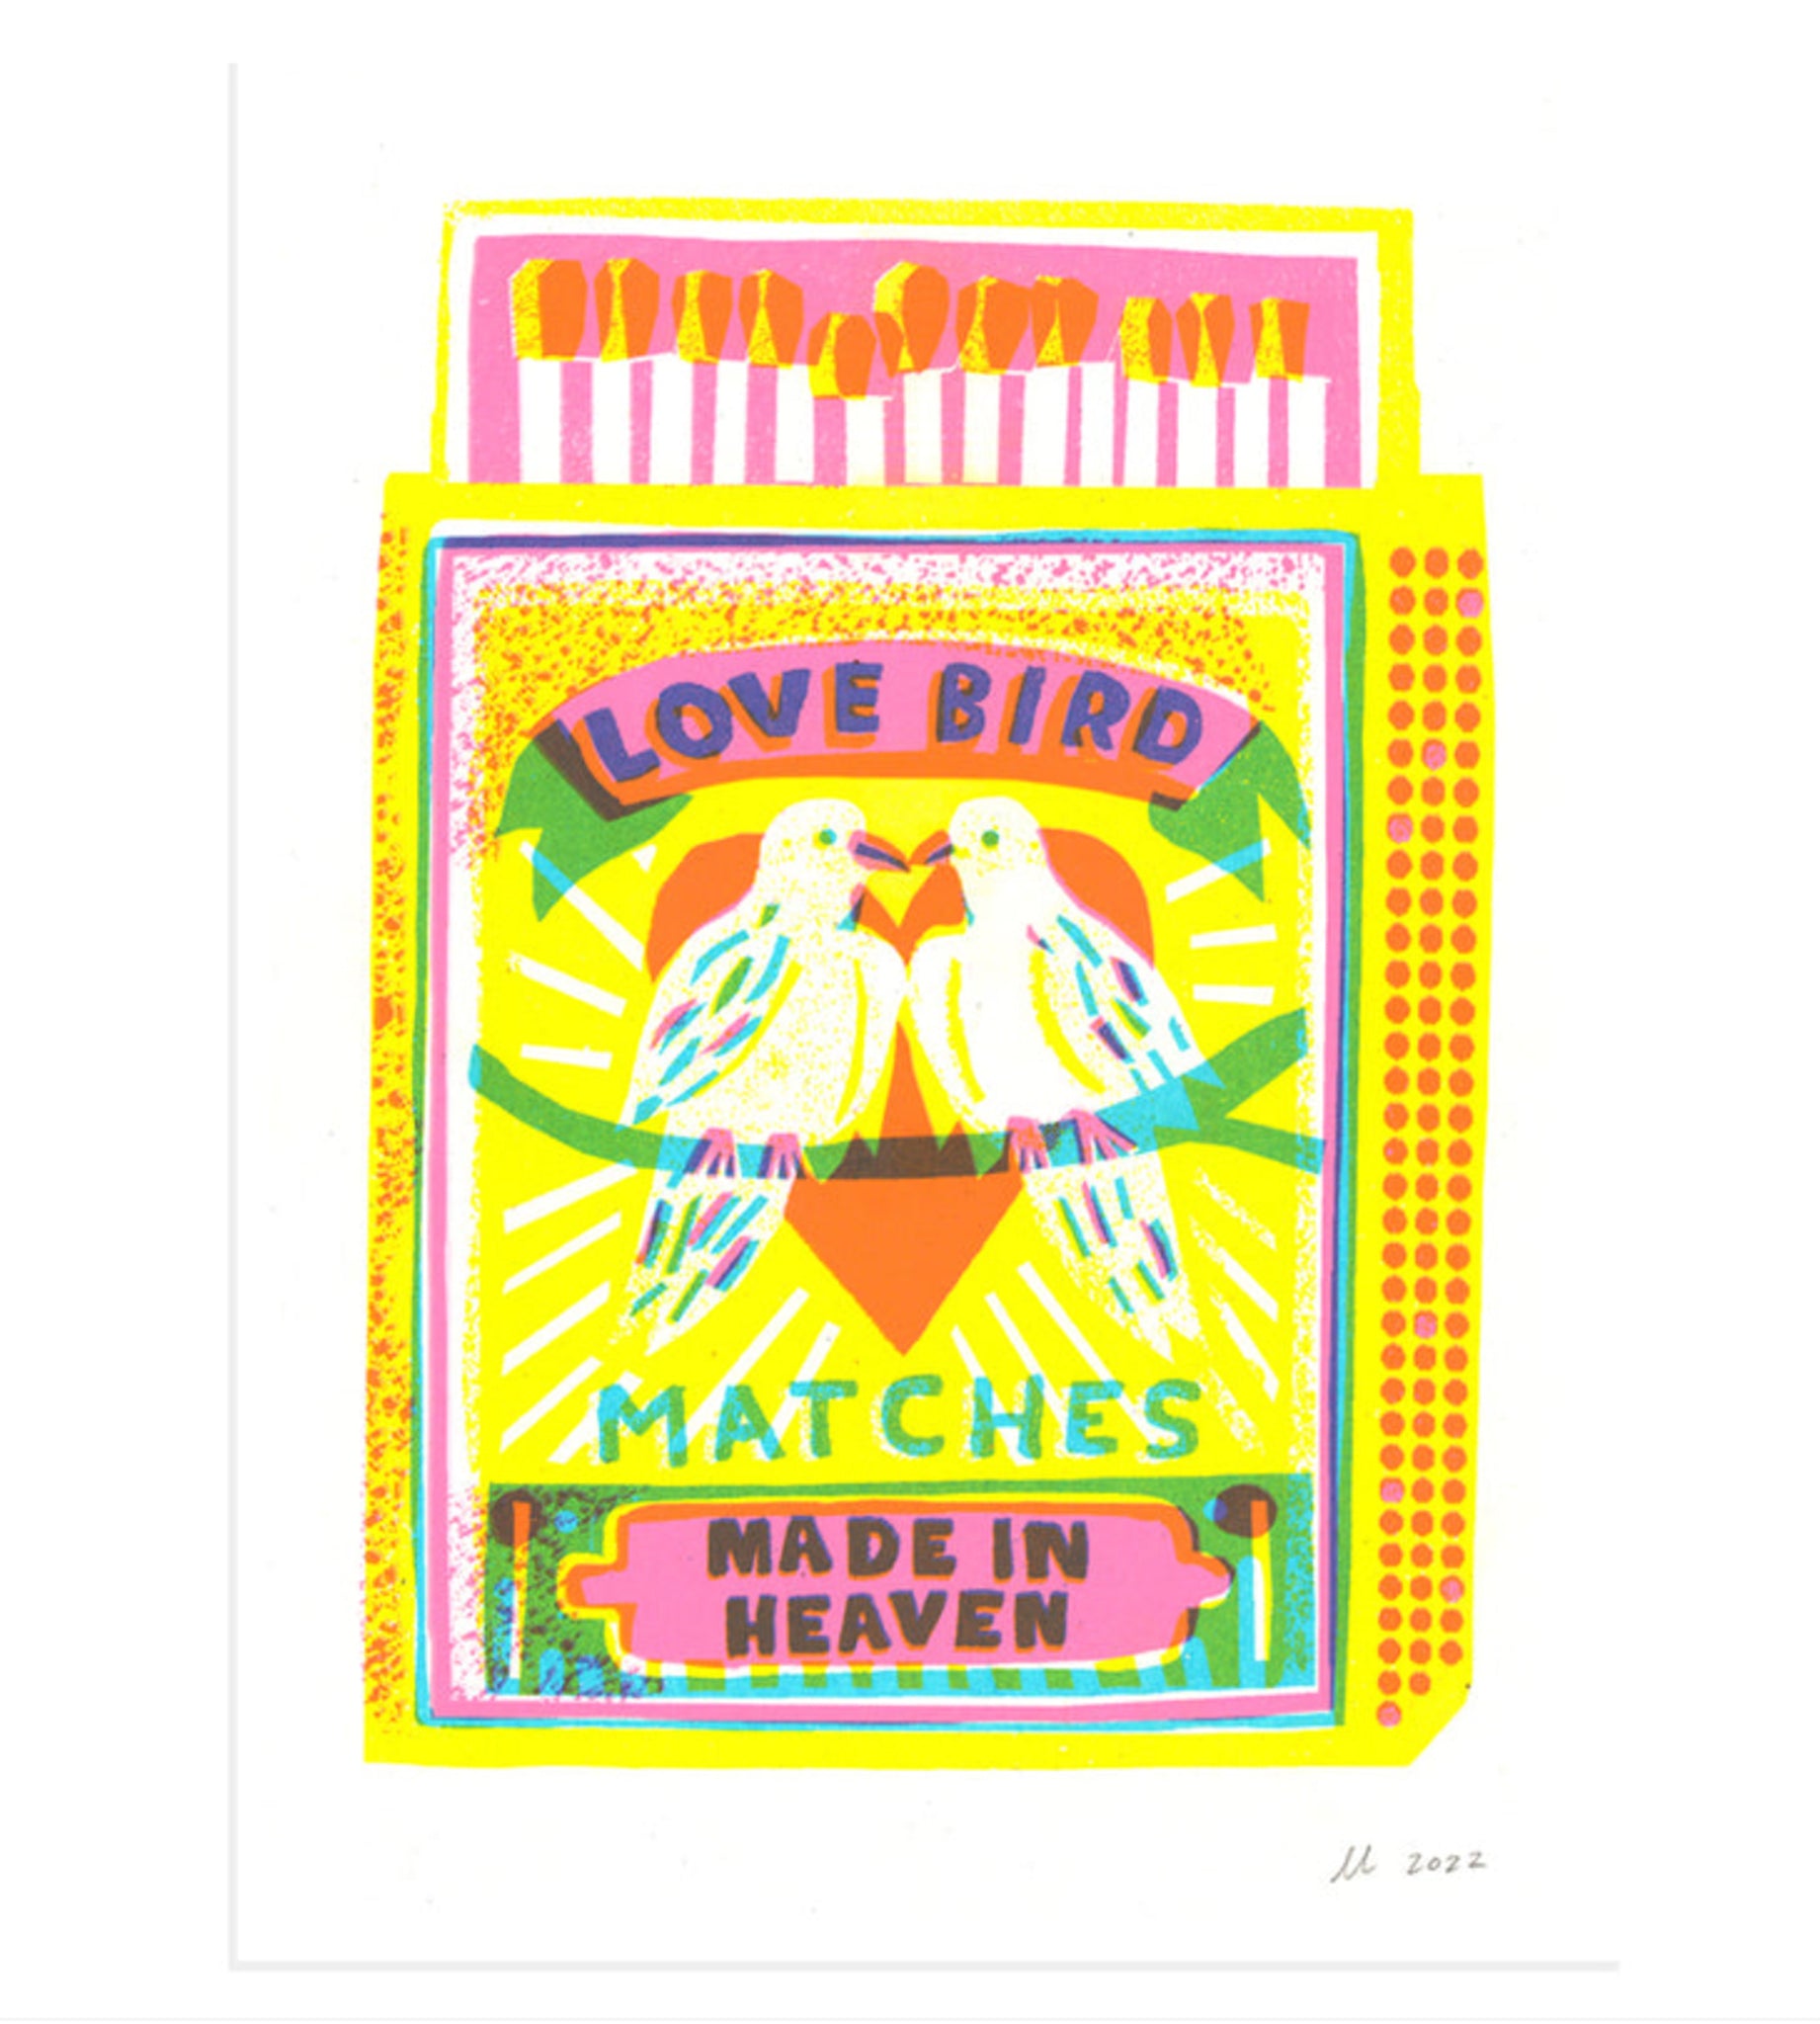 Love Bird Matches print